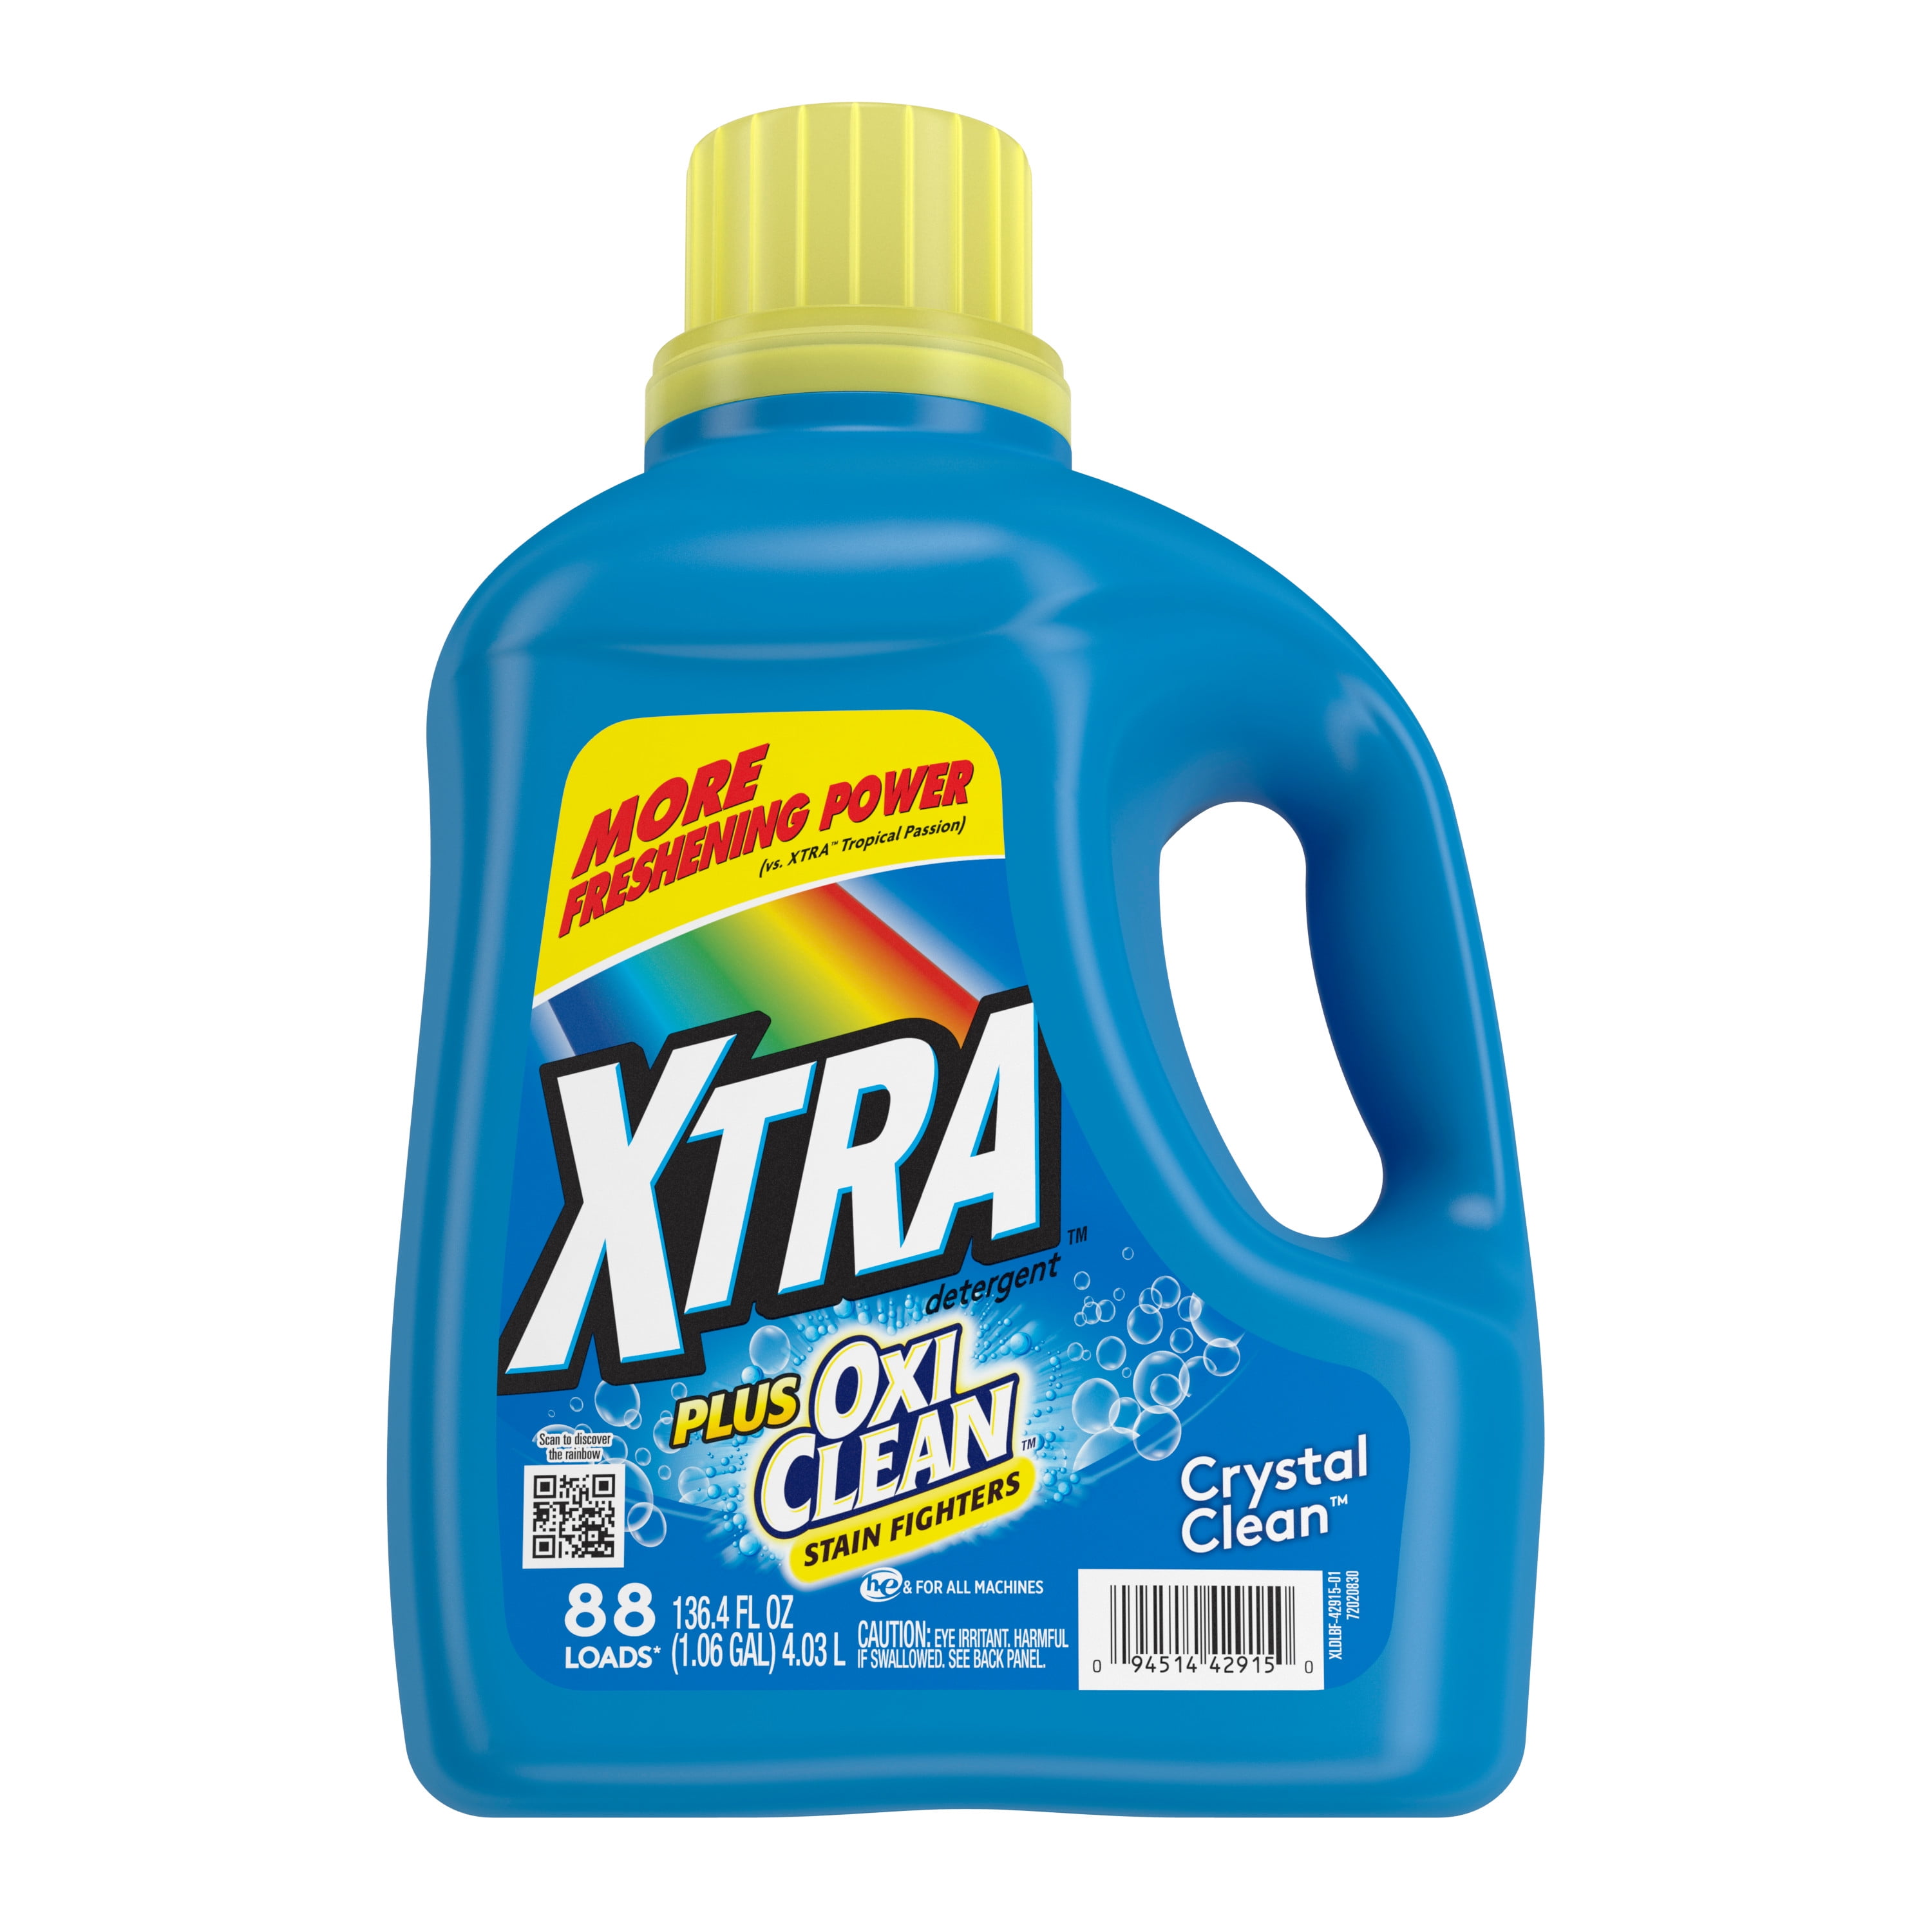 XTRA Plus OxiClean, Crystal Clean, 88 Loads Liquid Laundry Detergent, 136.4 Fl oz